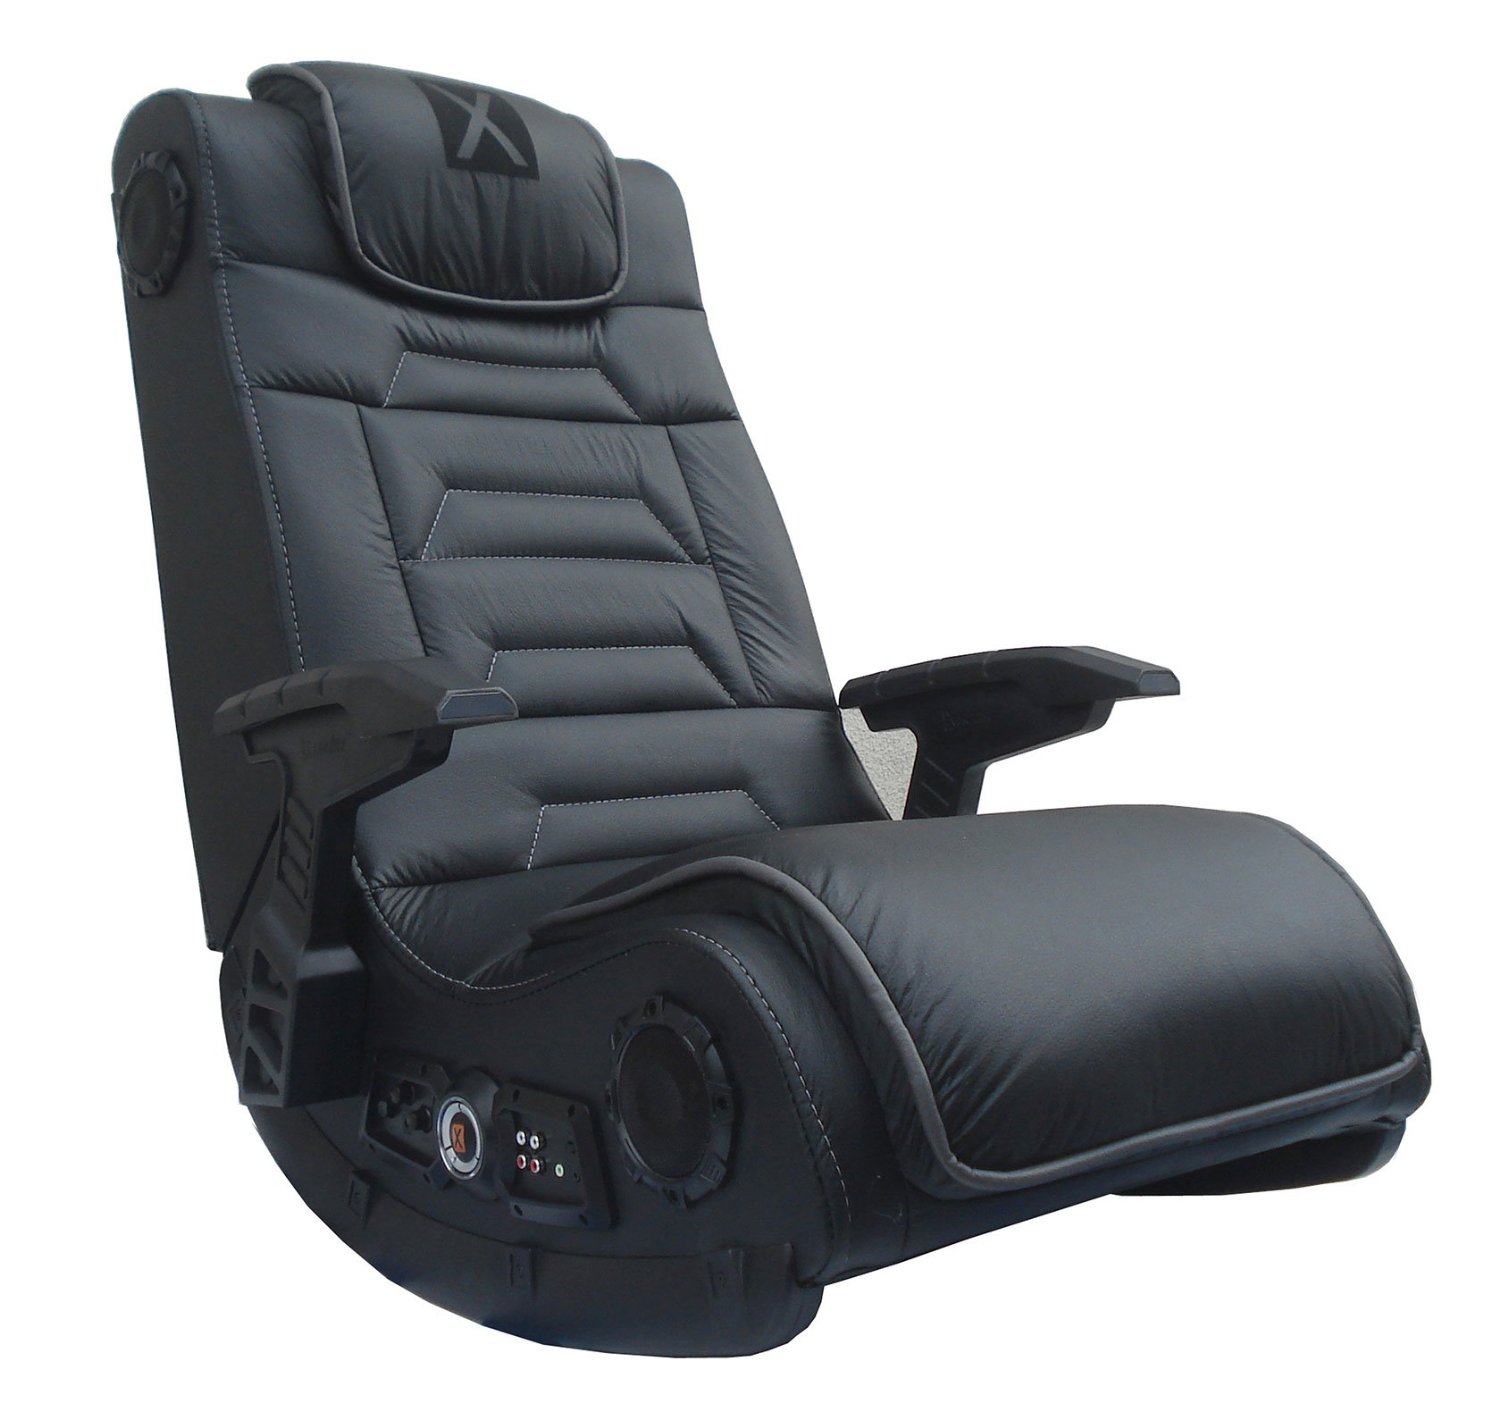 Game chair x Rocker 51259 pro h3 4.1 audio gaming chair ... TLJLRJW